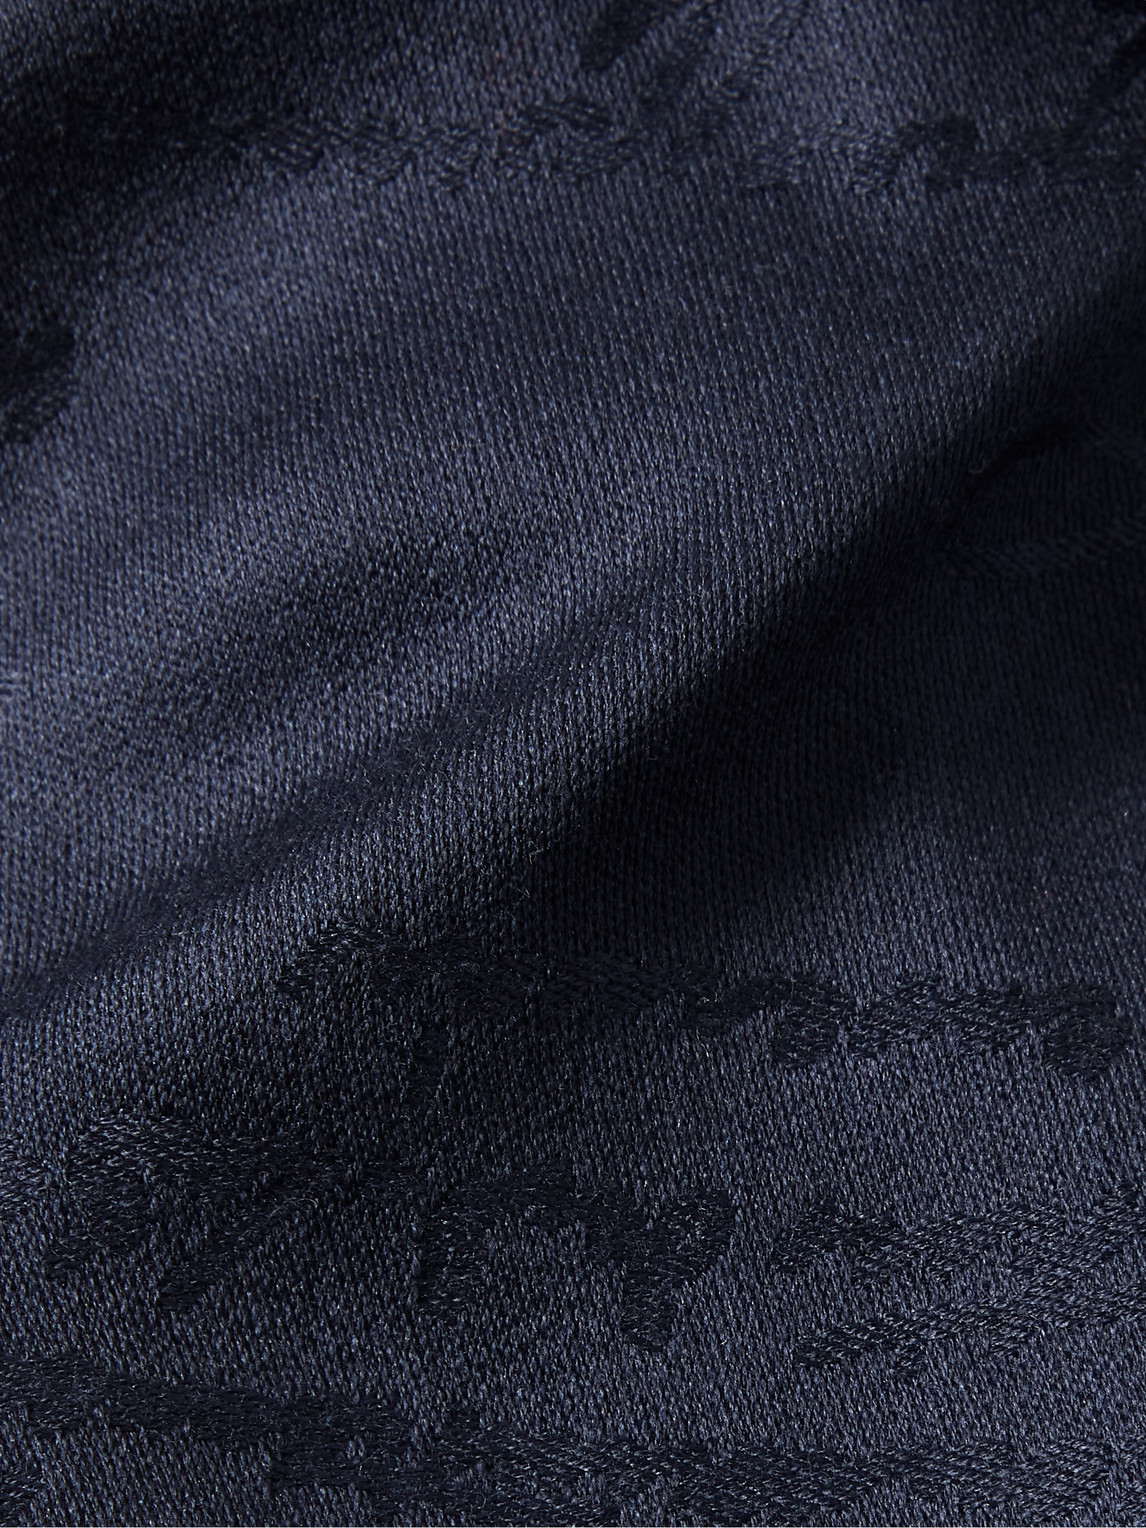 Berluti - Men - Scritto Arabesque Frayed Mulberry Silk and Cashmere-Blend Jacquard Scarf Blue